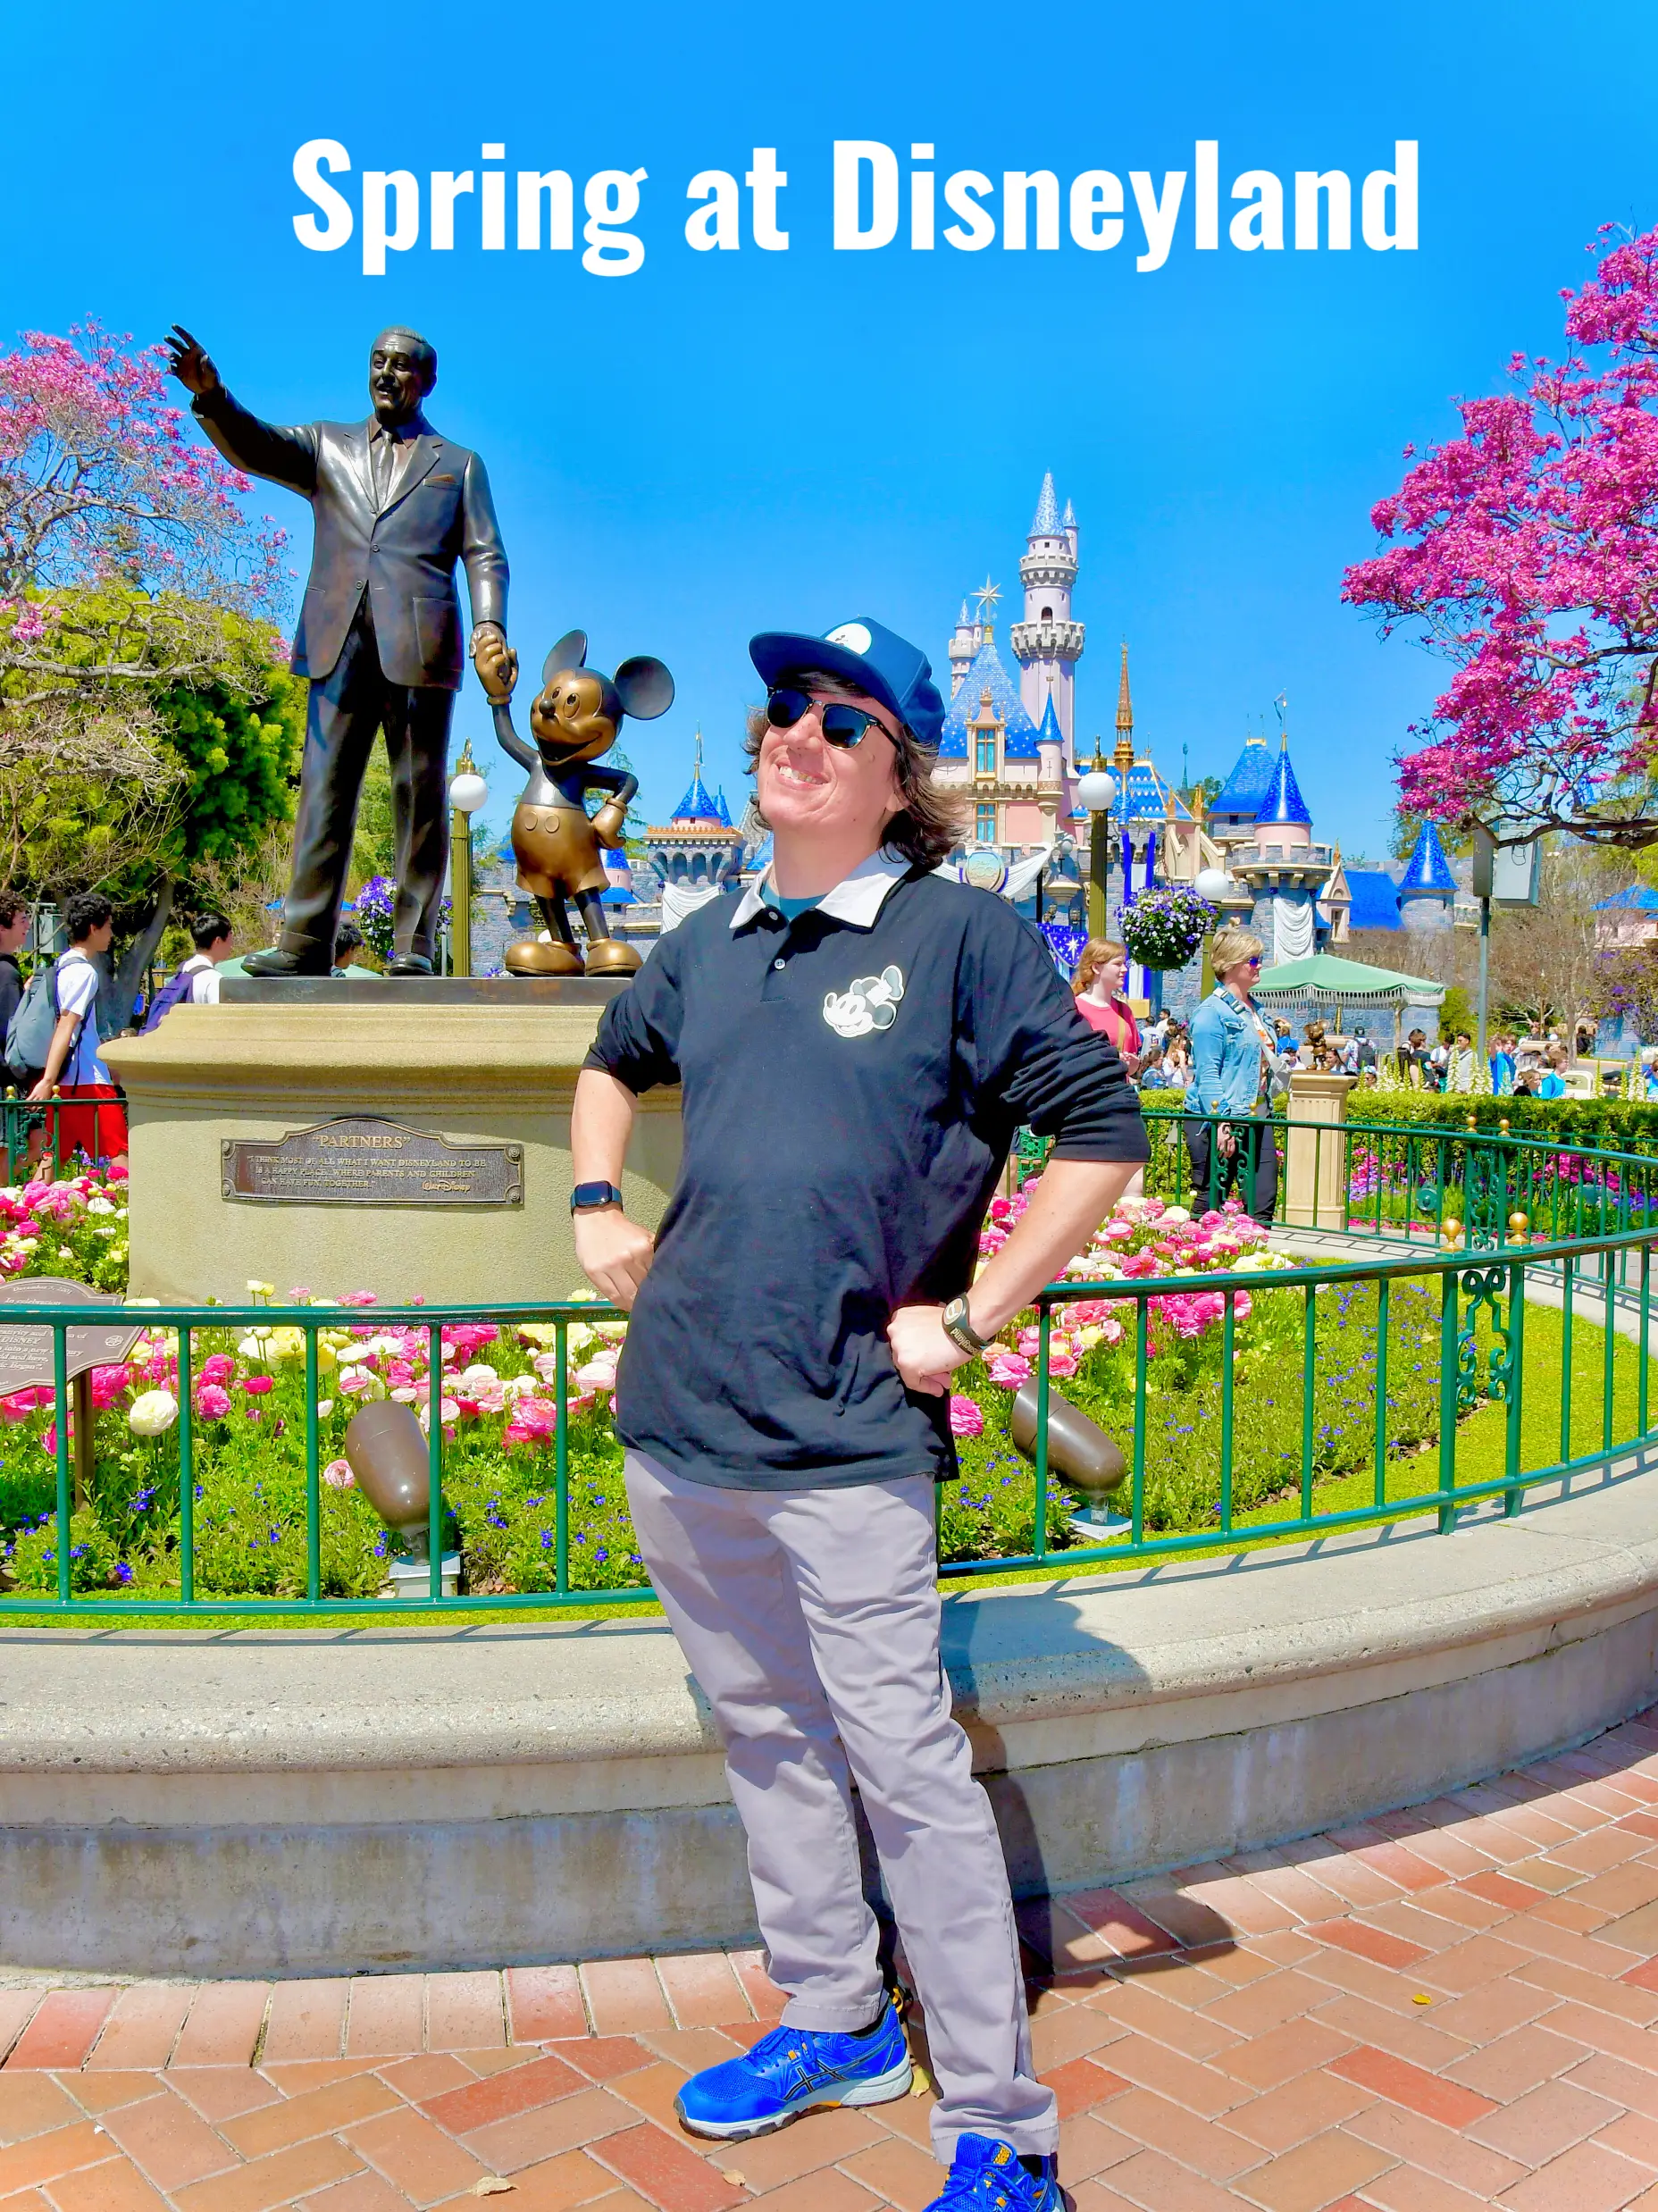 Disneyland Spring Lookbook – A BIT WONG